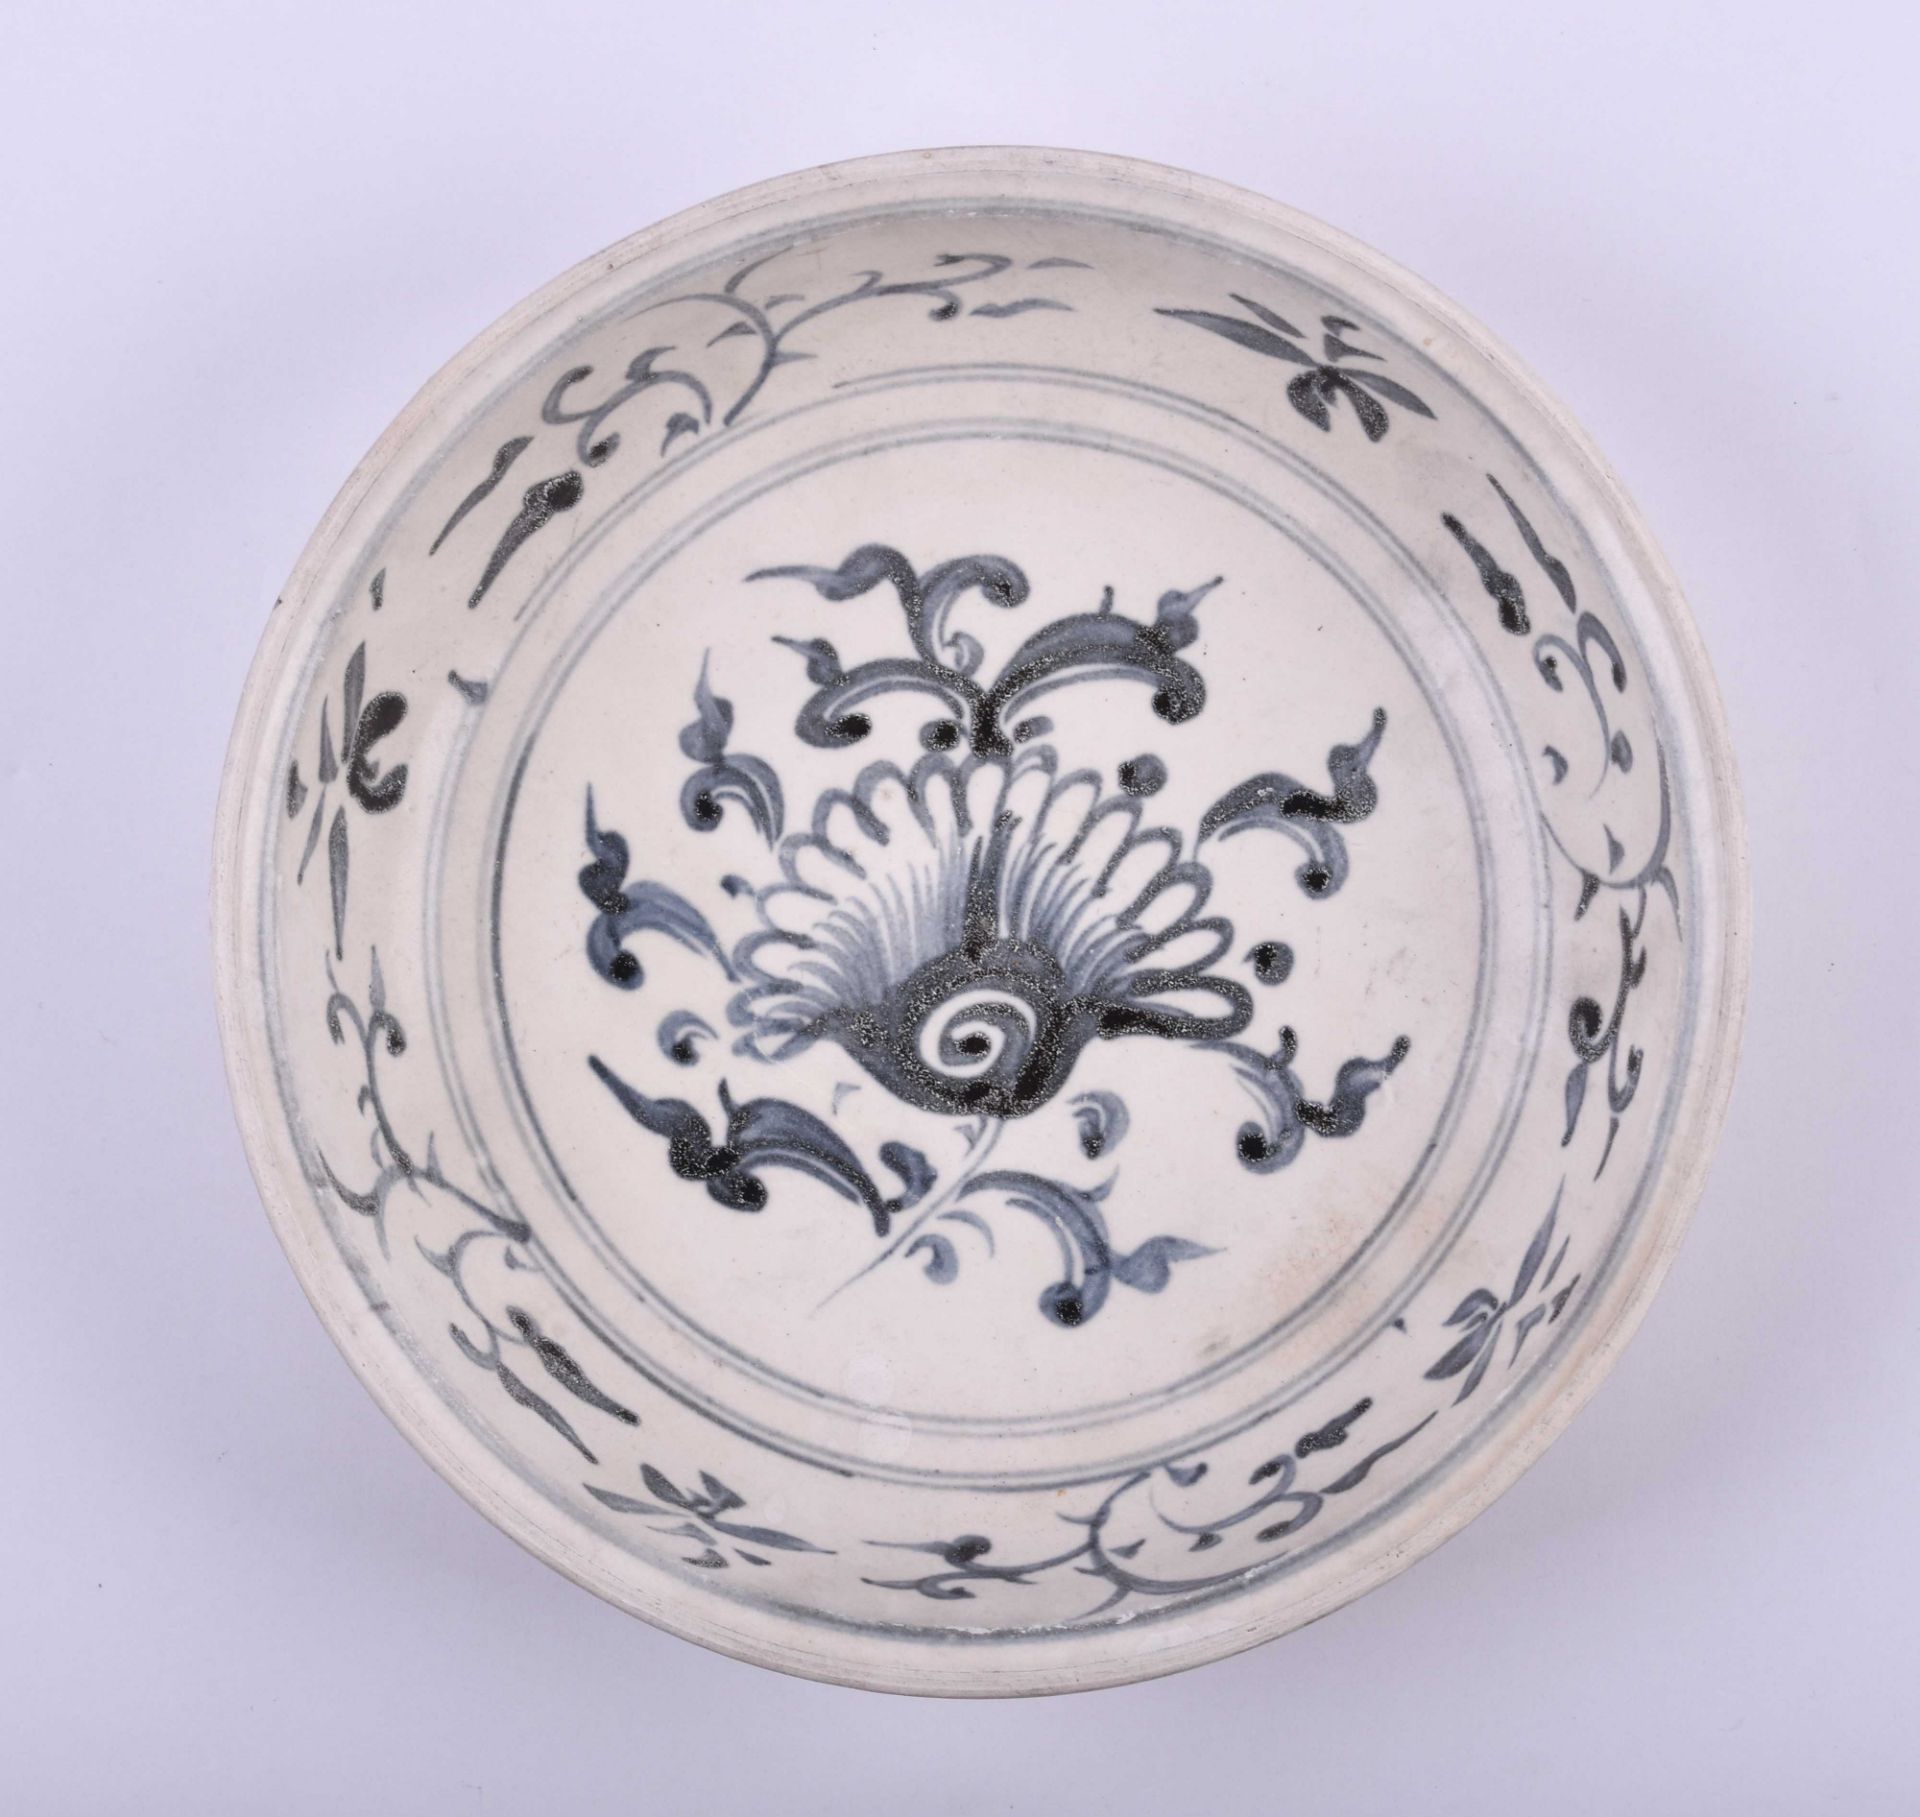  Bowl China Ming dynasty - Image 2 of 8